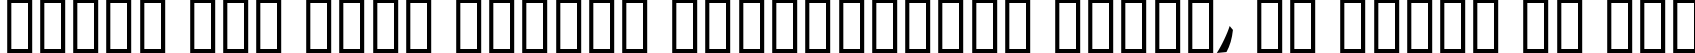 Пример написания шрифтом DomoAregato Italic текста на русском